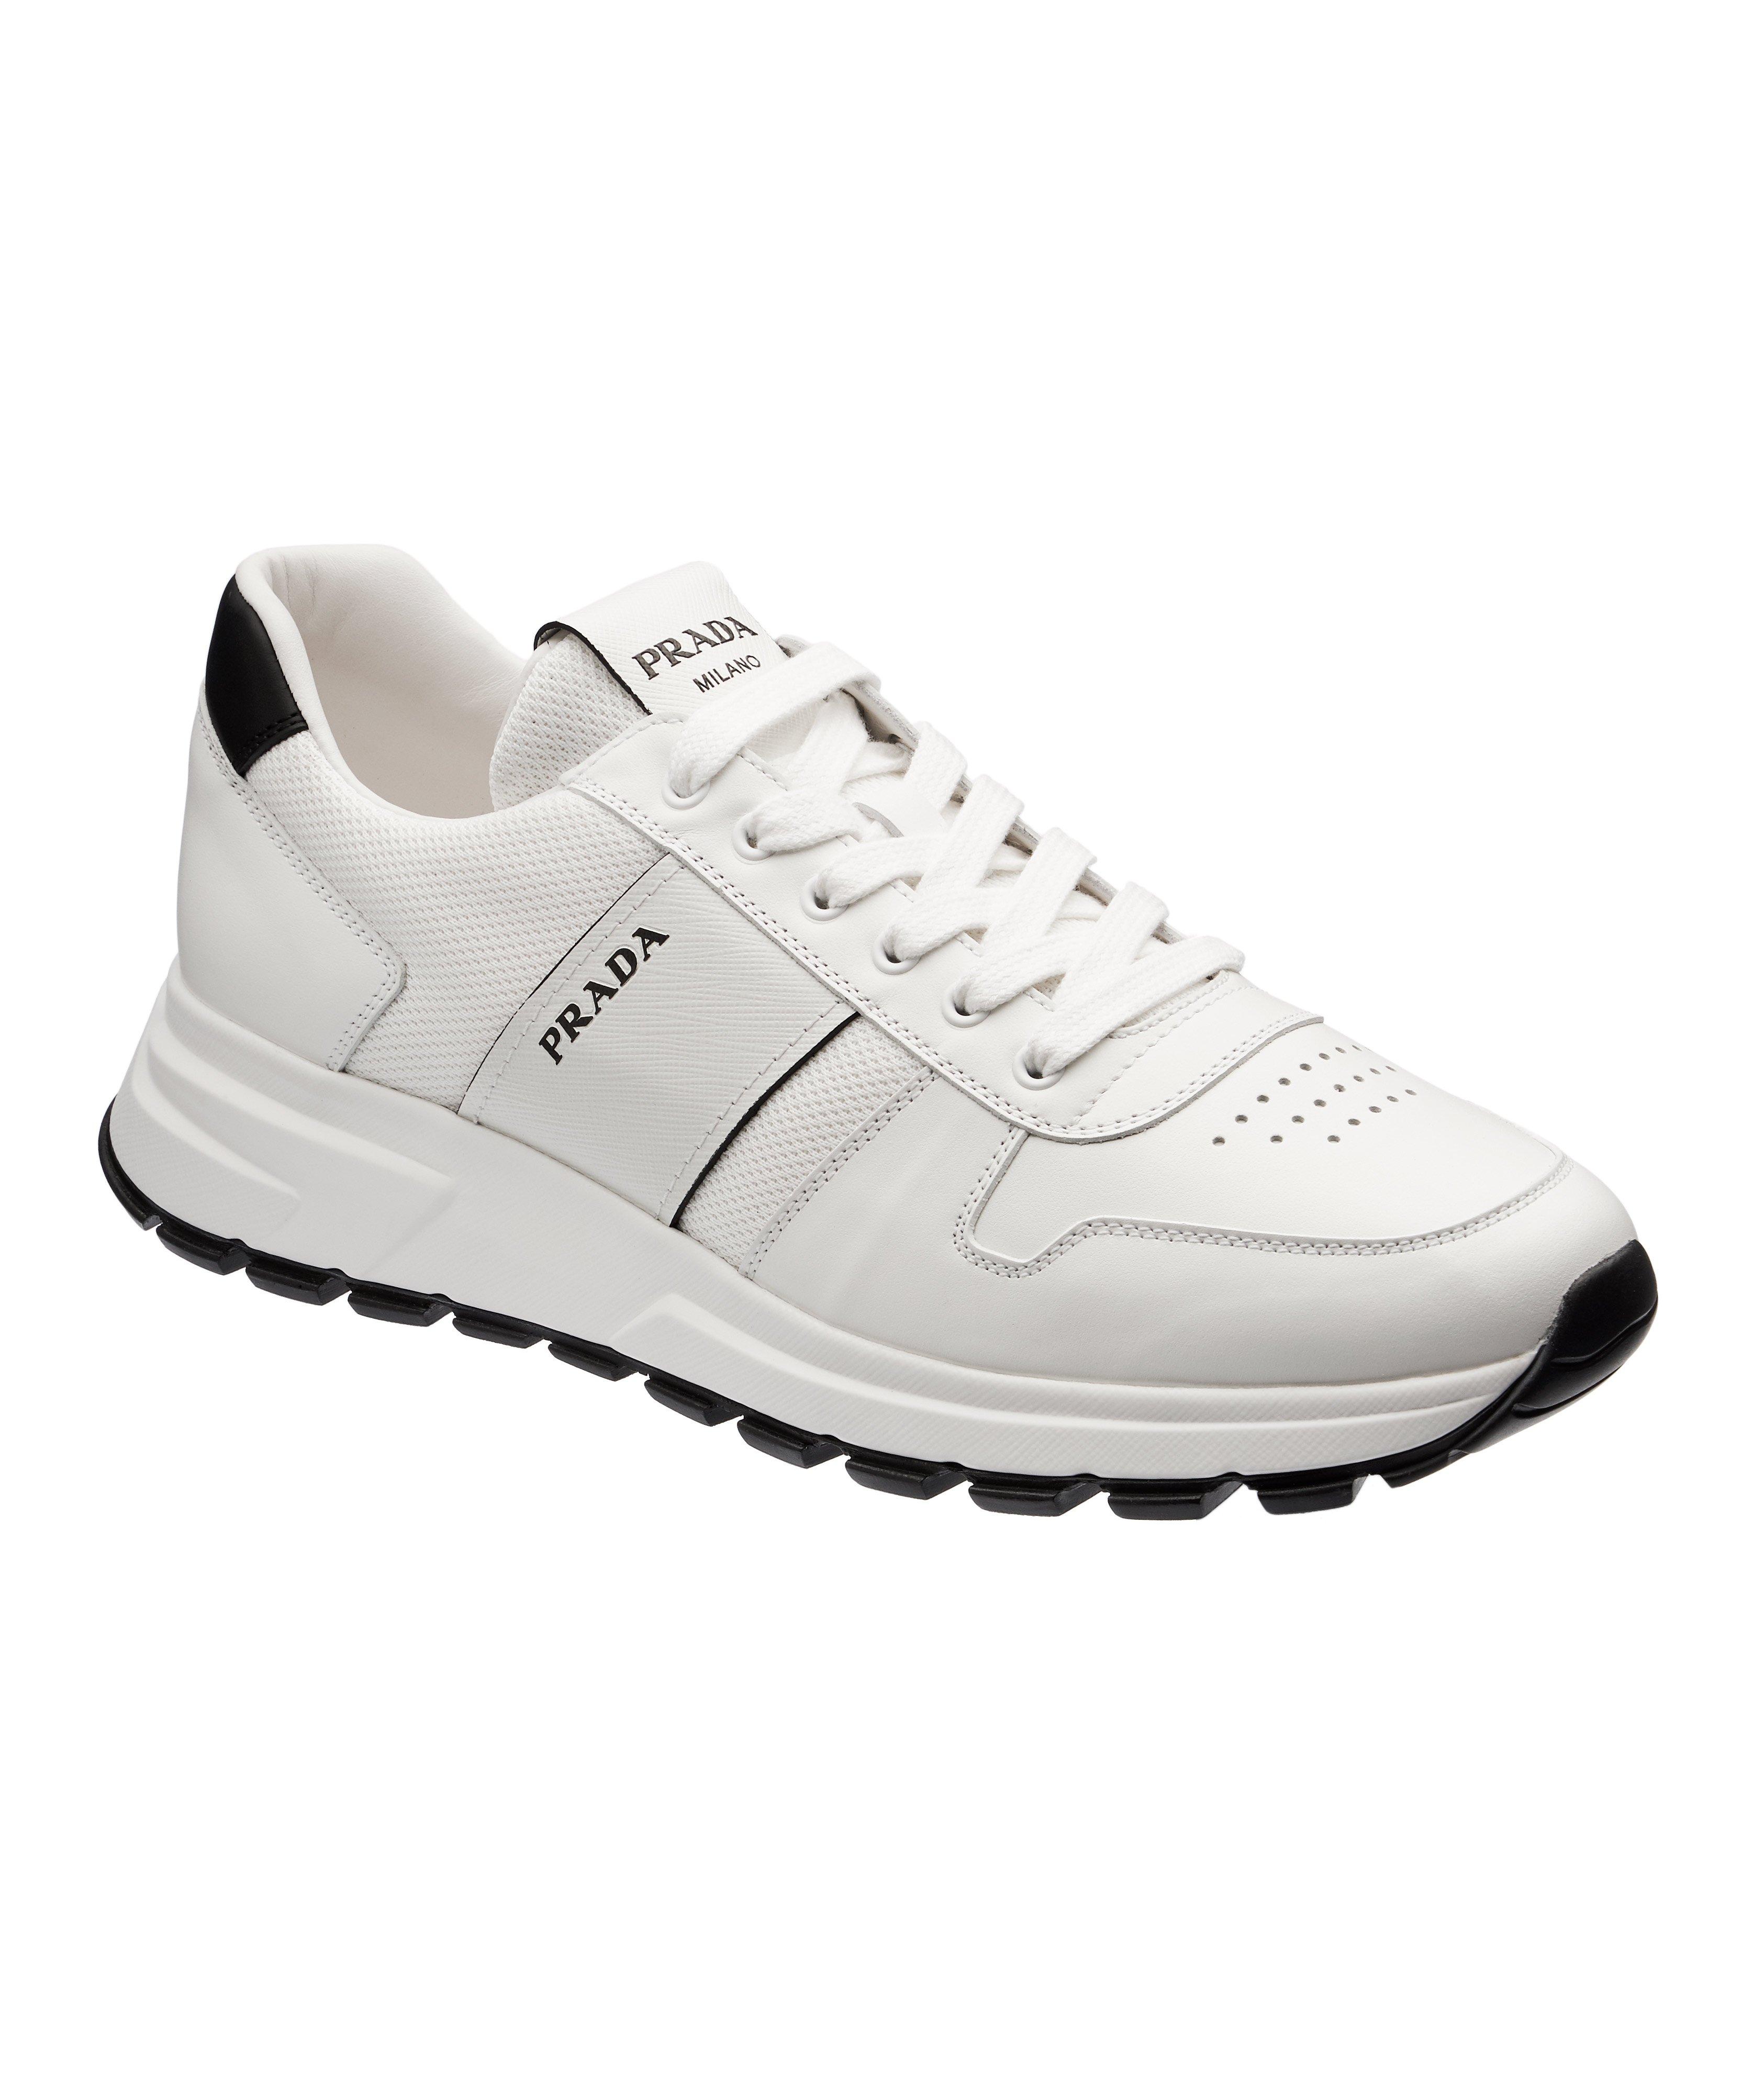 Prax 01 Leather Sneakers